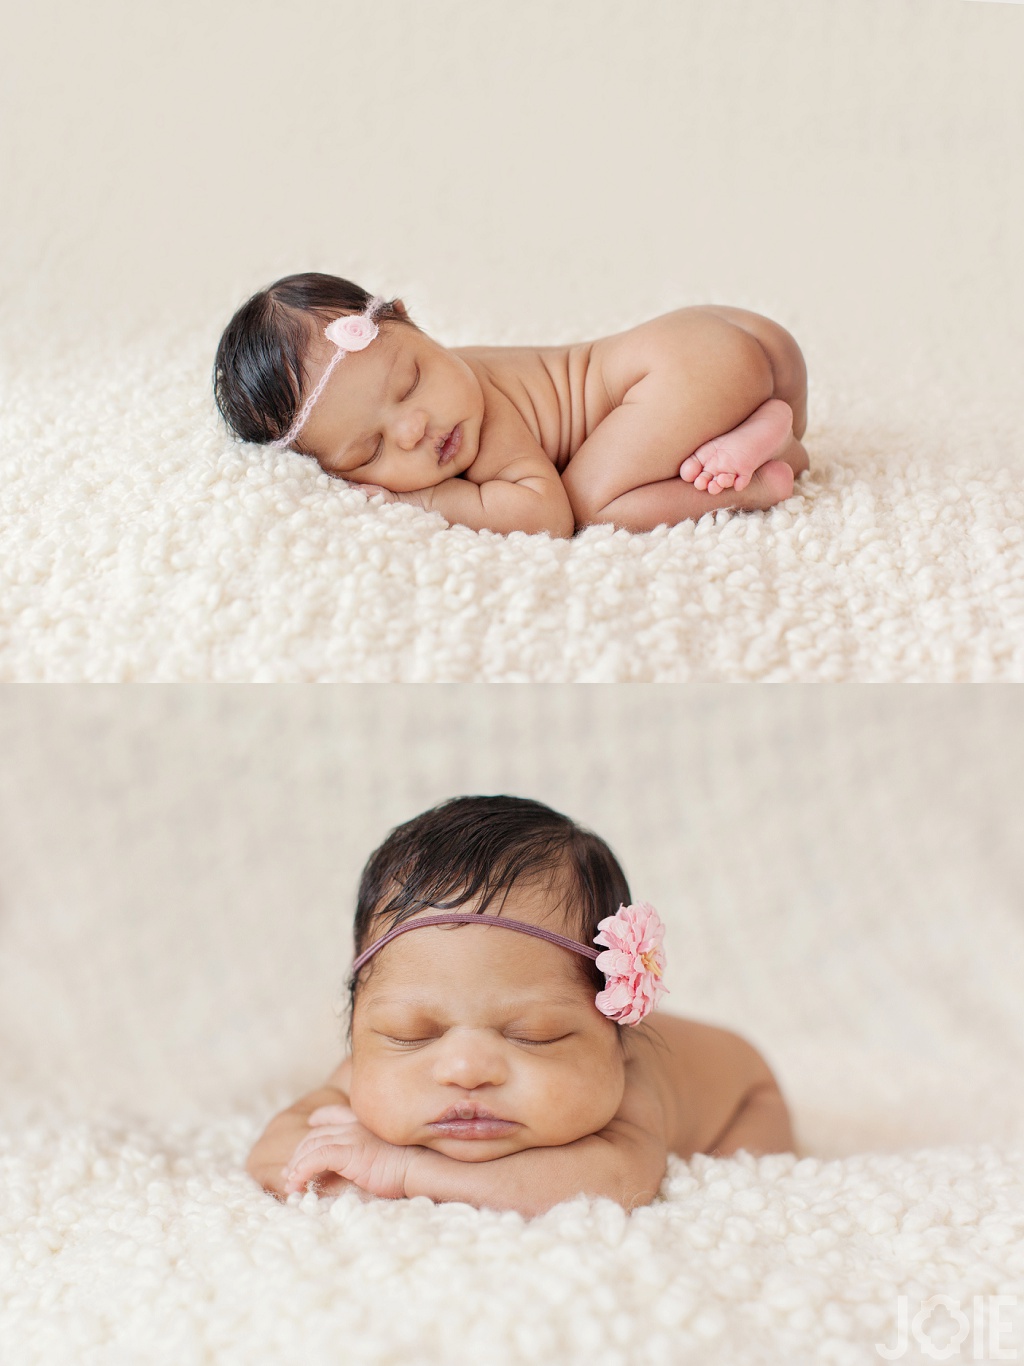 Baby Walker's Houston newborn photo session